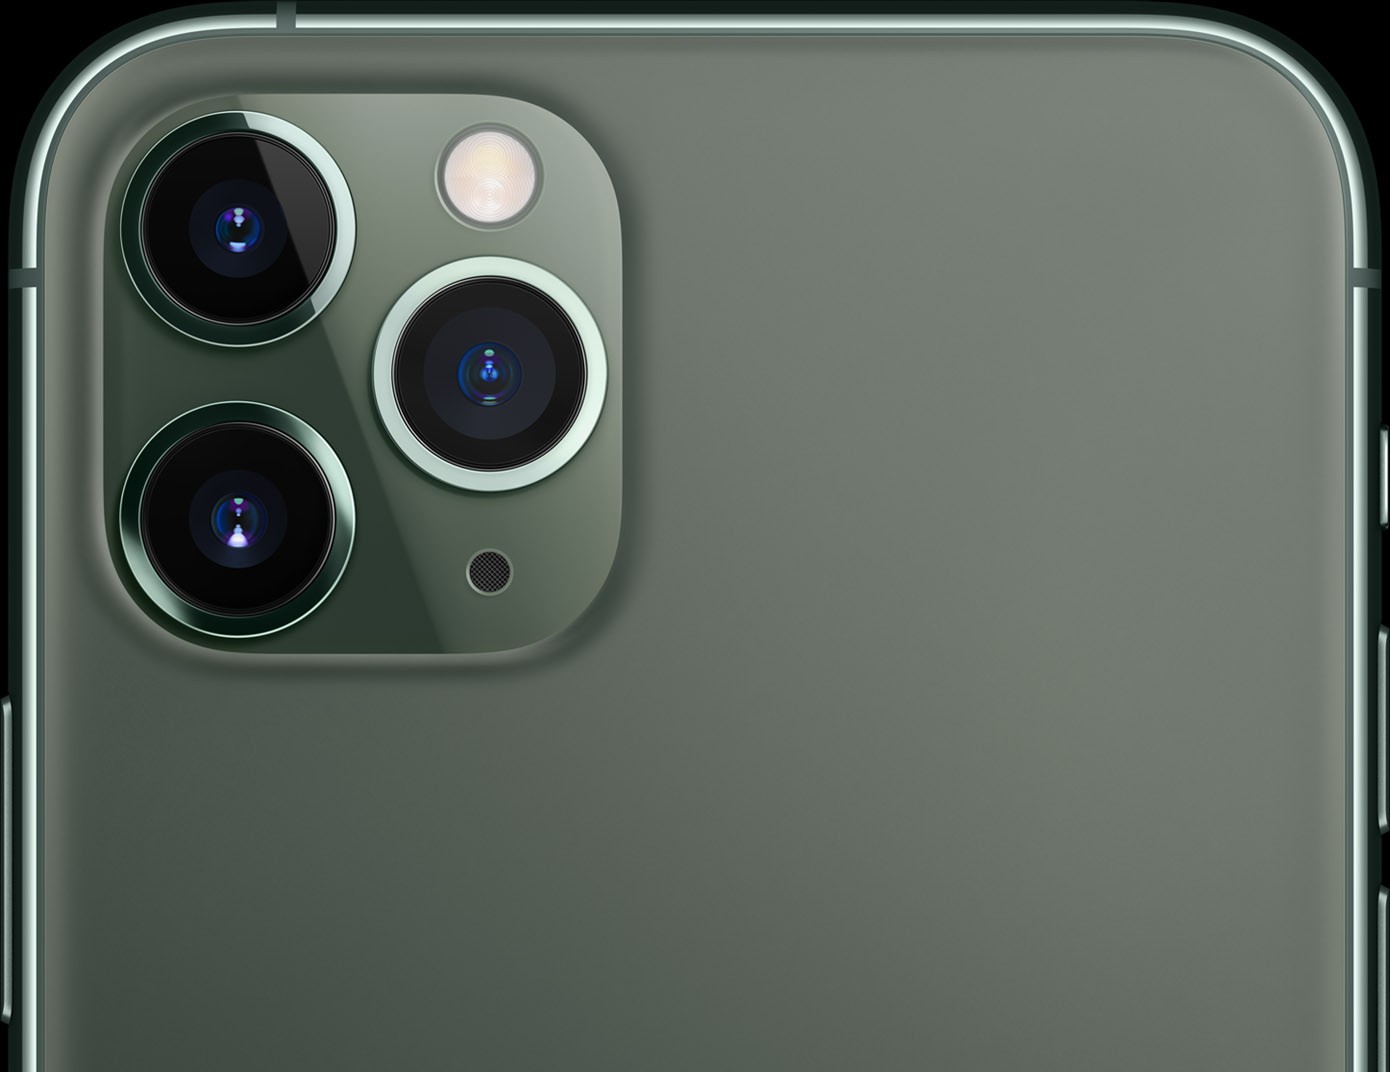 iPhone 11 Pro カメラも、ディスプレイも、性能も、Pro。